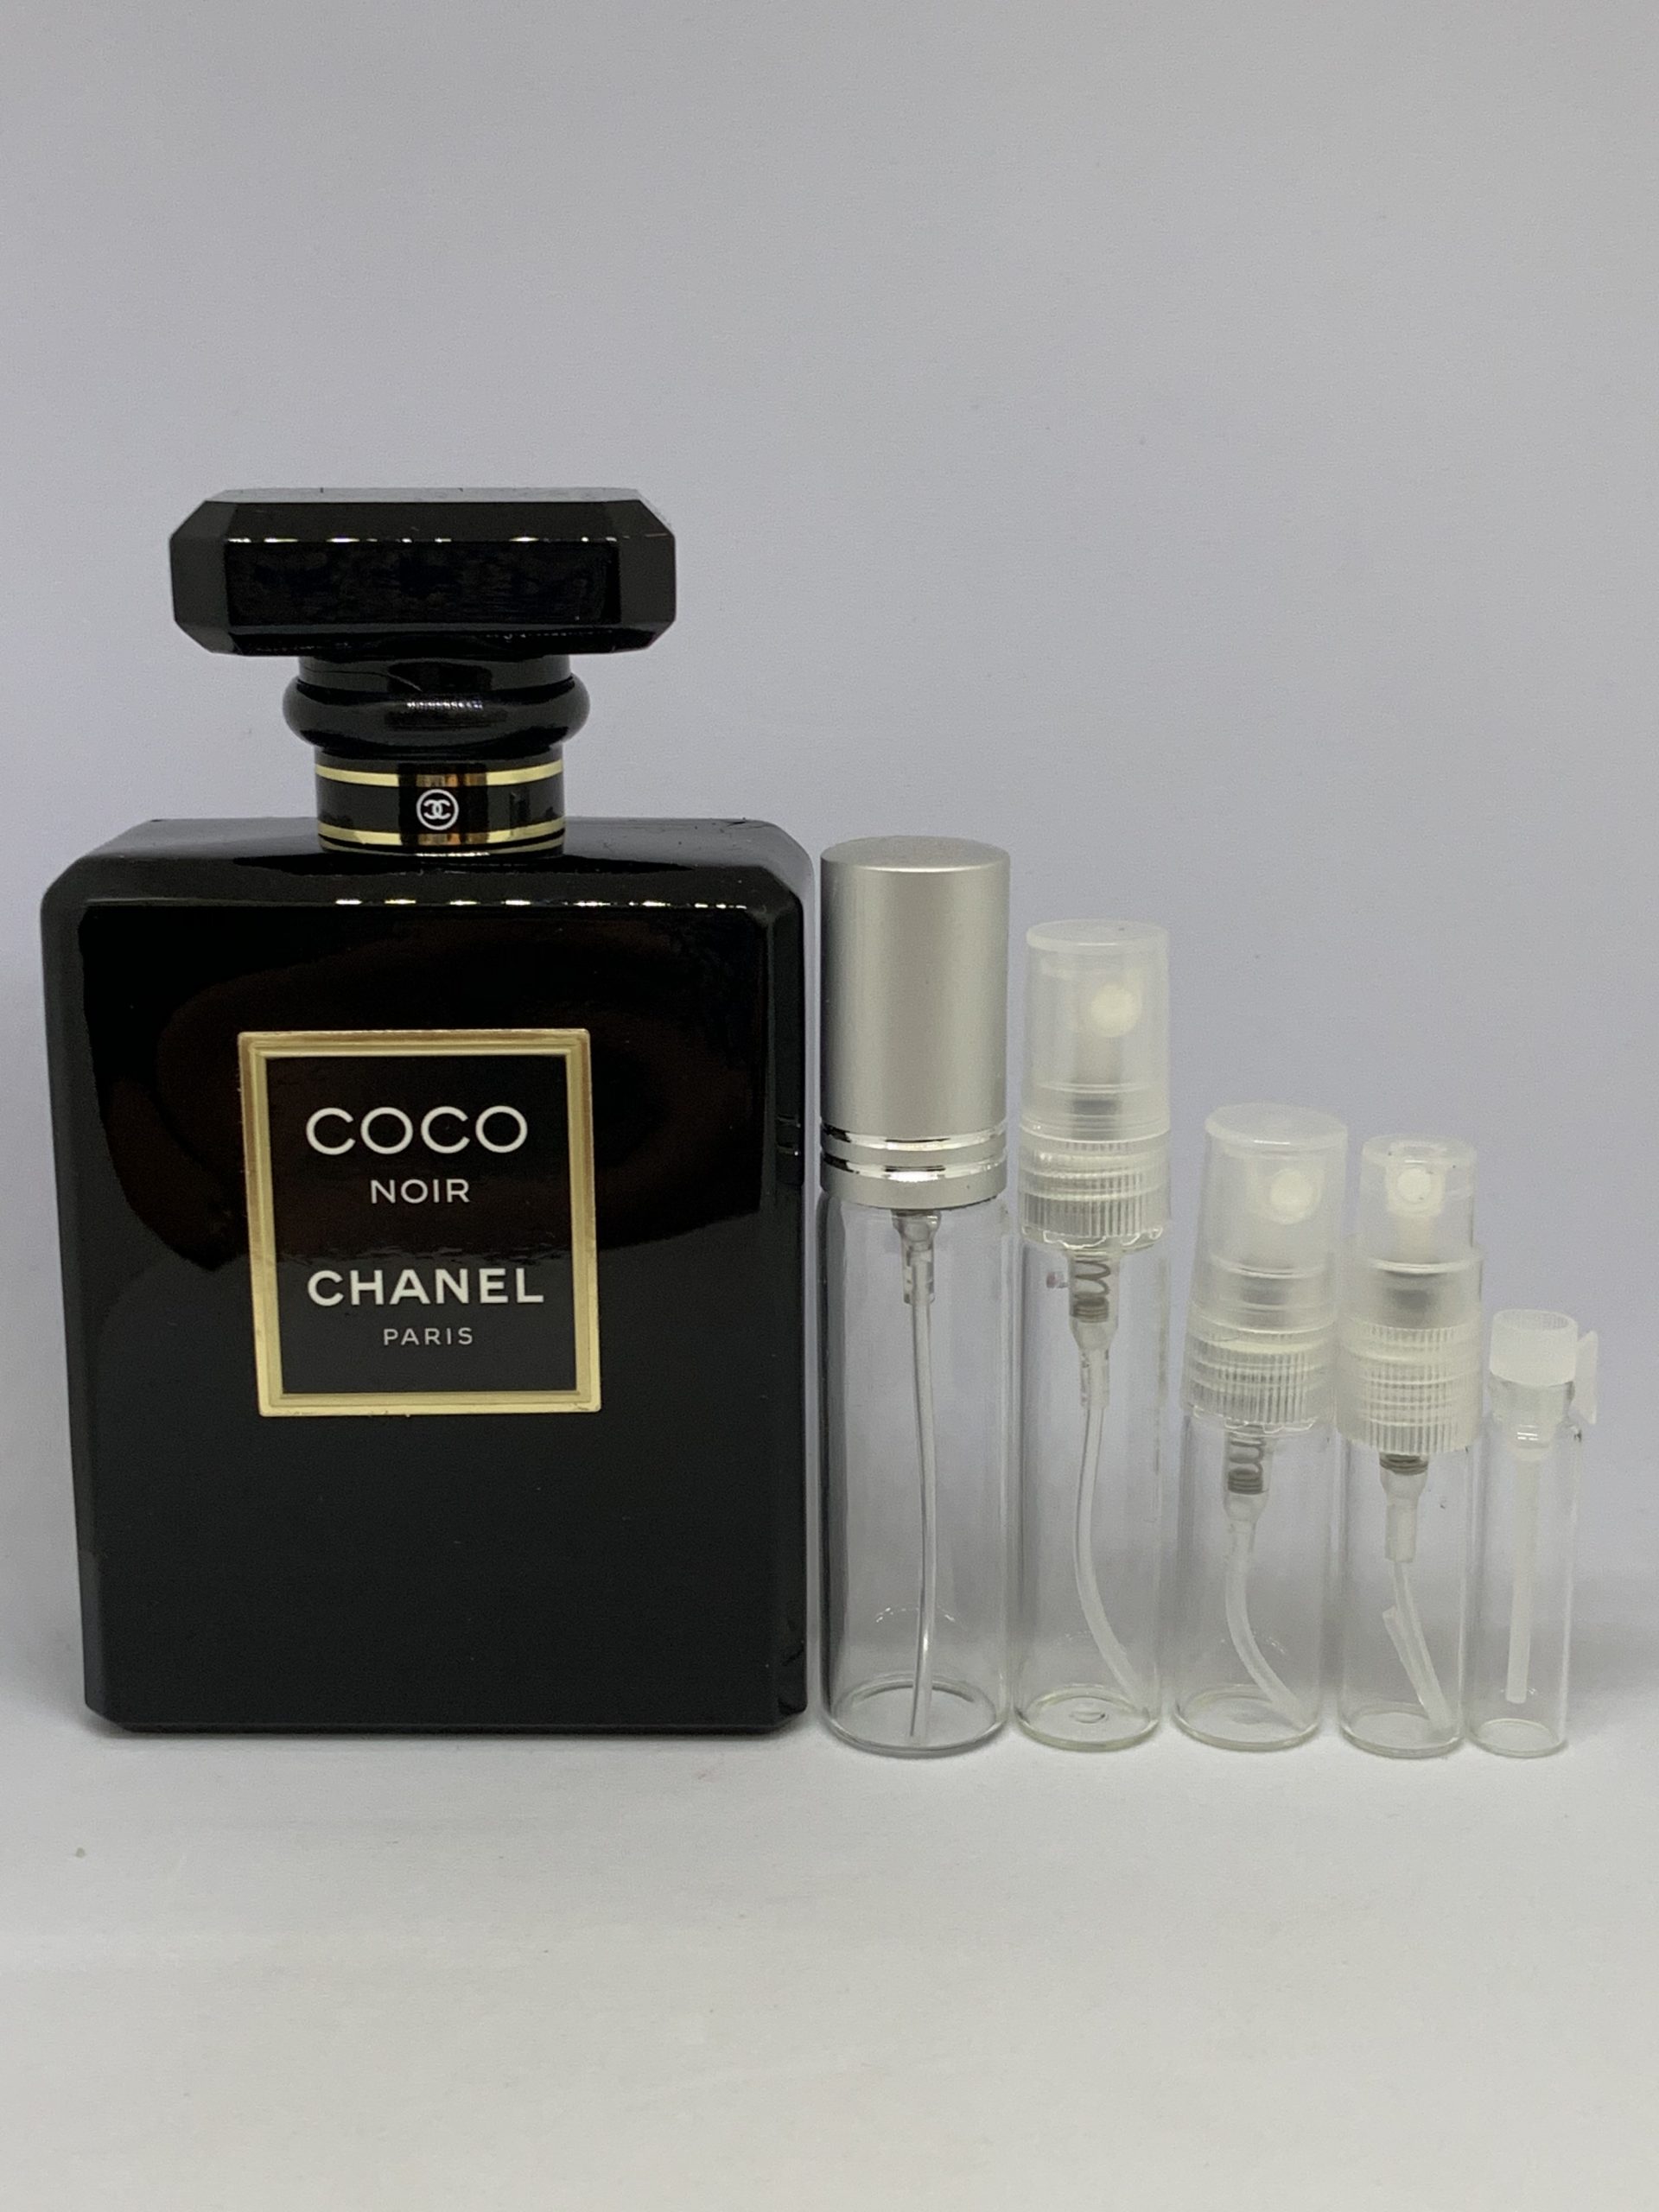 Chanel Coco Noir parfum sample 2ml & Fragrance Stone - Depop